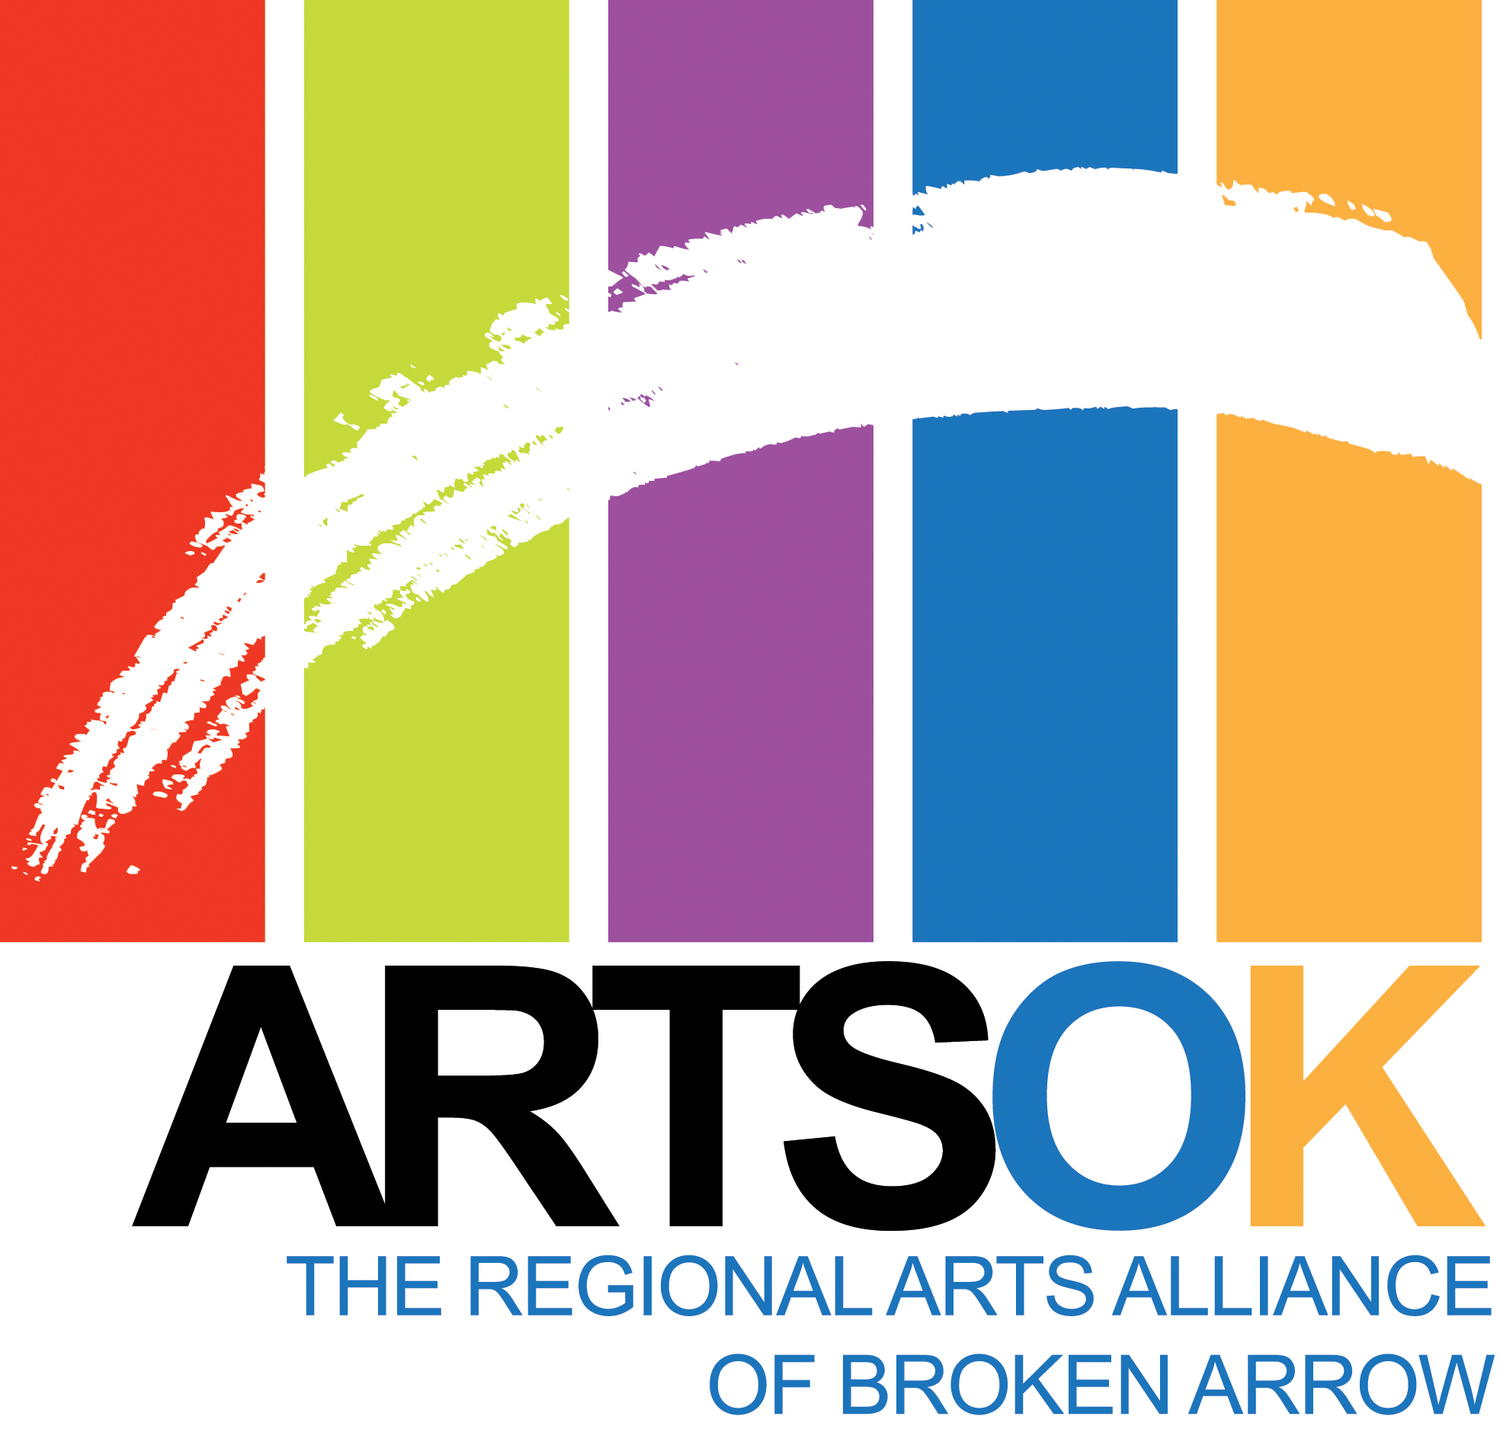 The Regional Arts Alliance of Broken Arrow